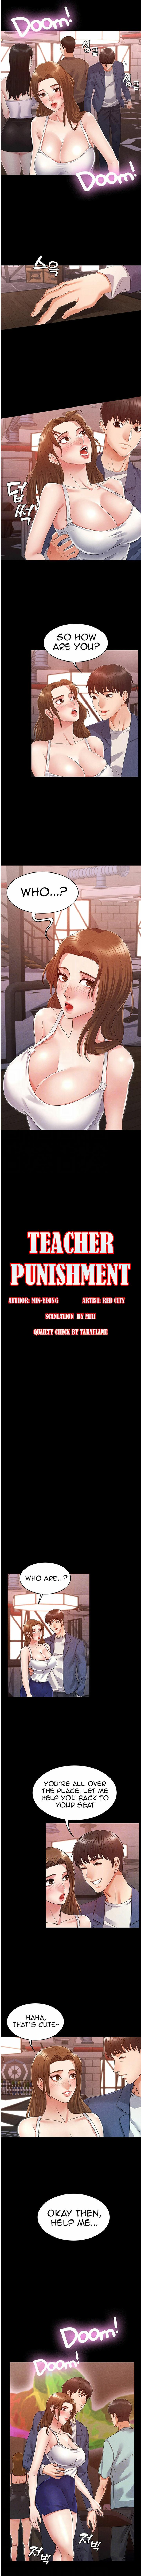 TEACHER PUNISHMENT Ch.1-11 11